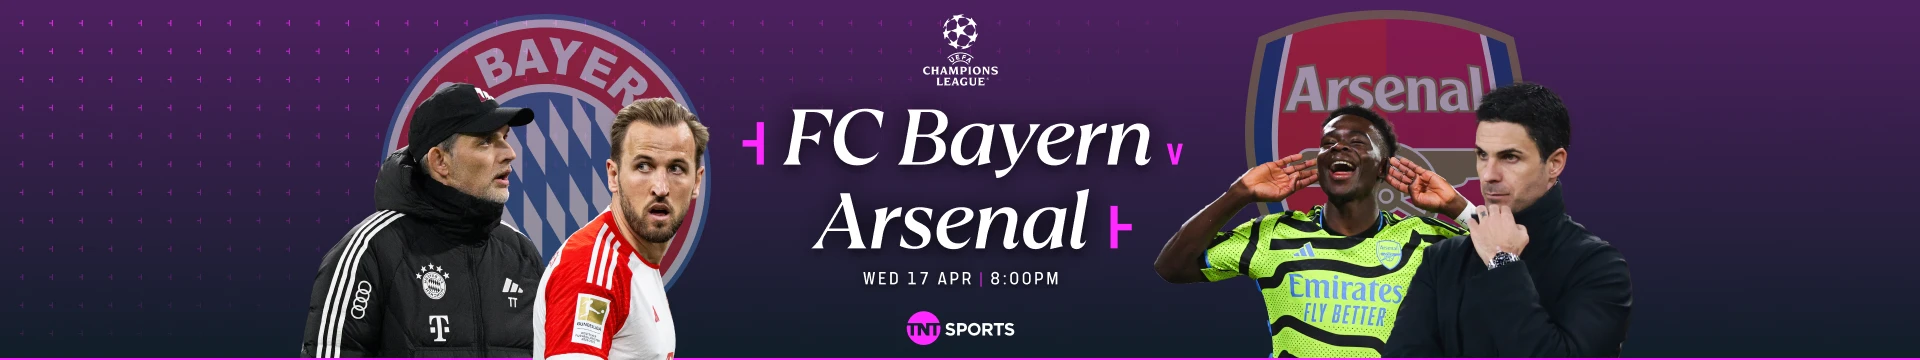 FC Bayern v Arsenal Wednesday 17 April at 8pm